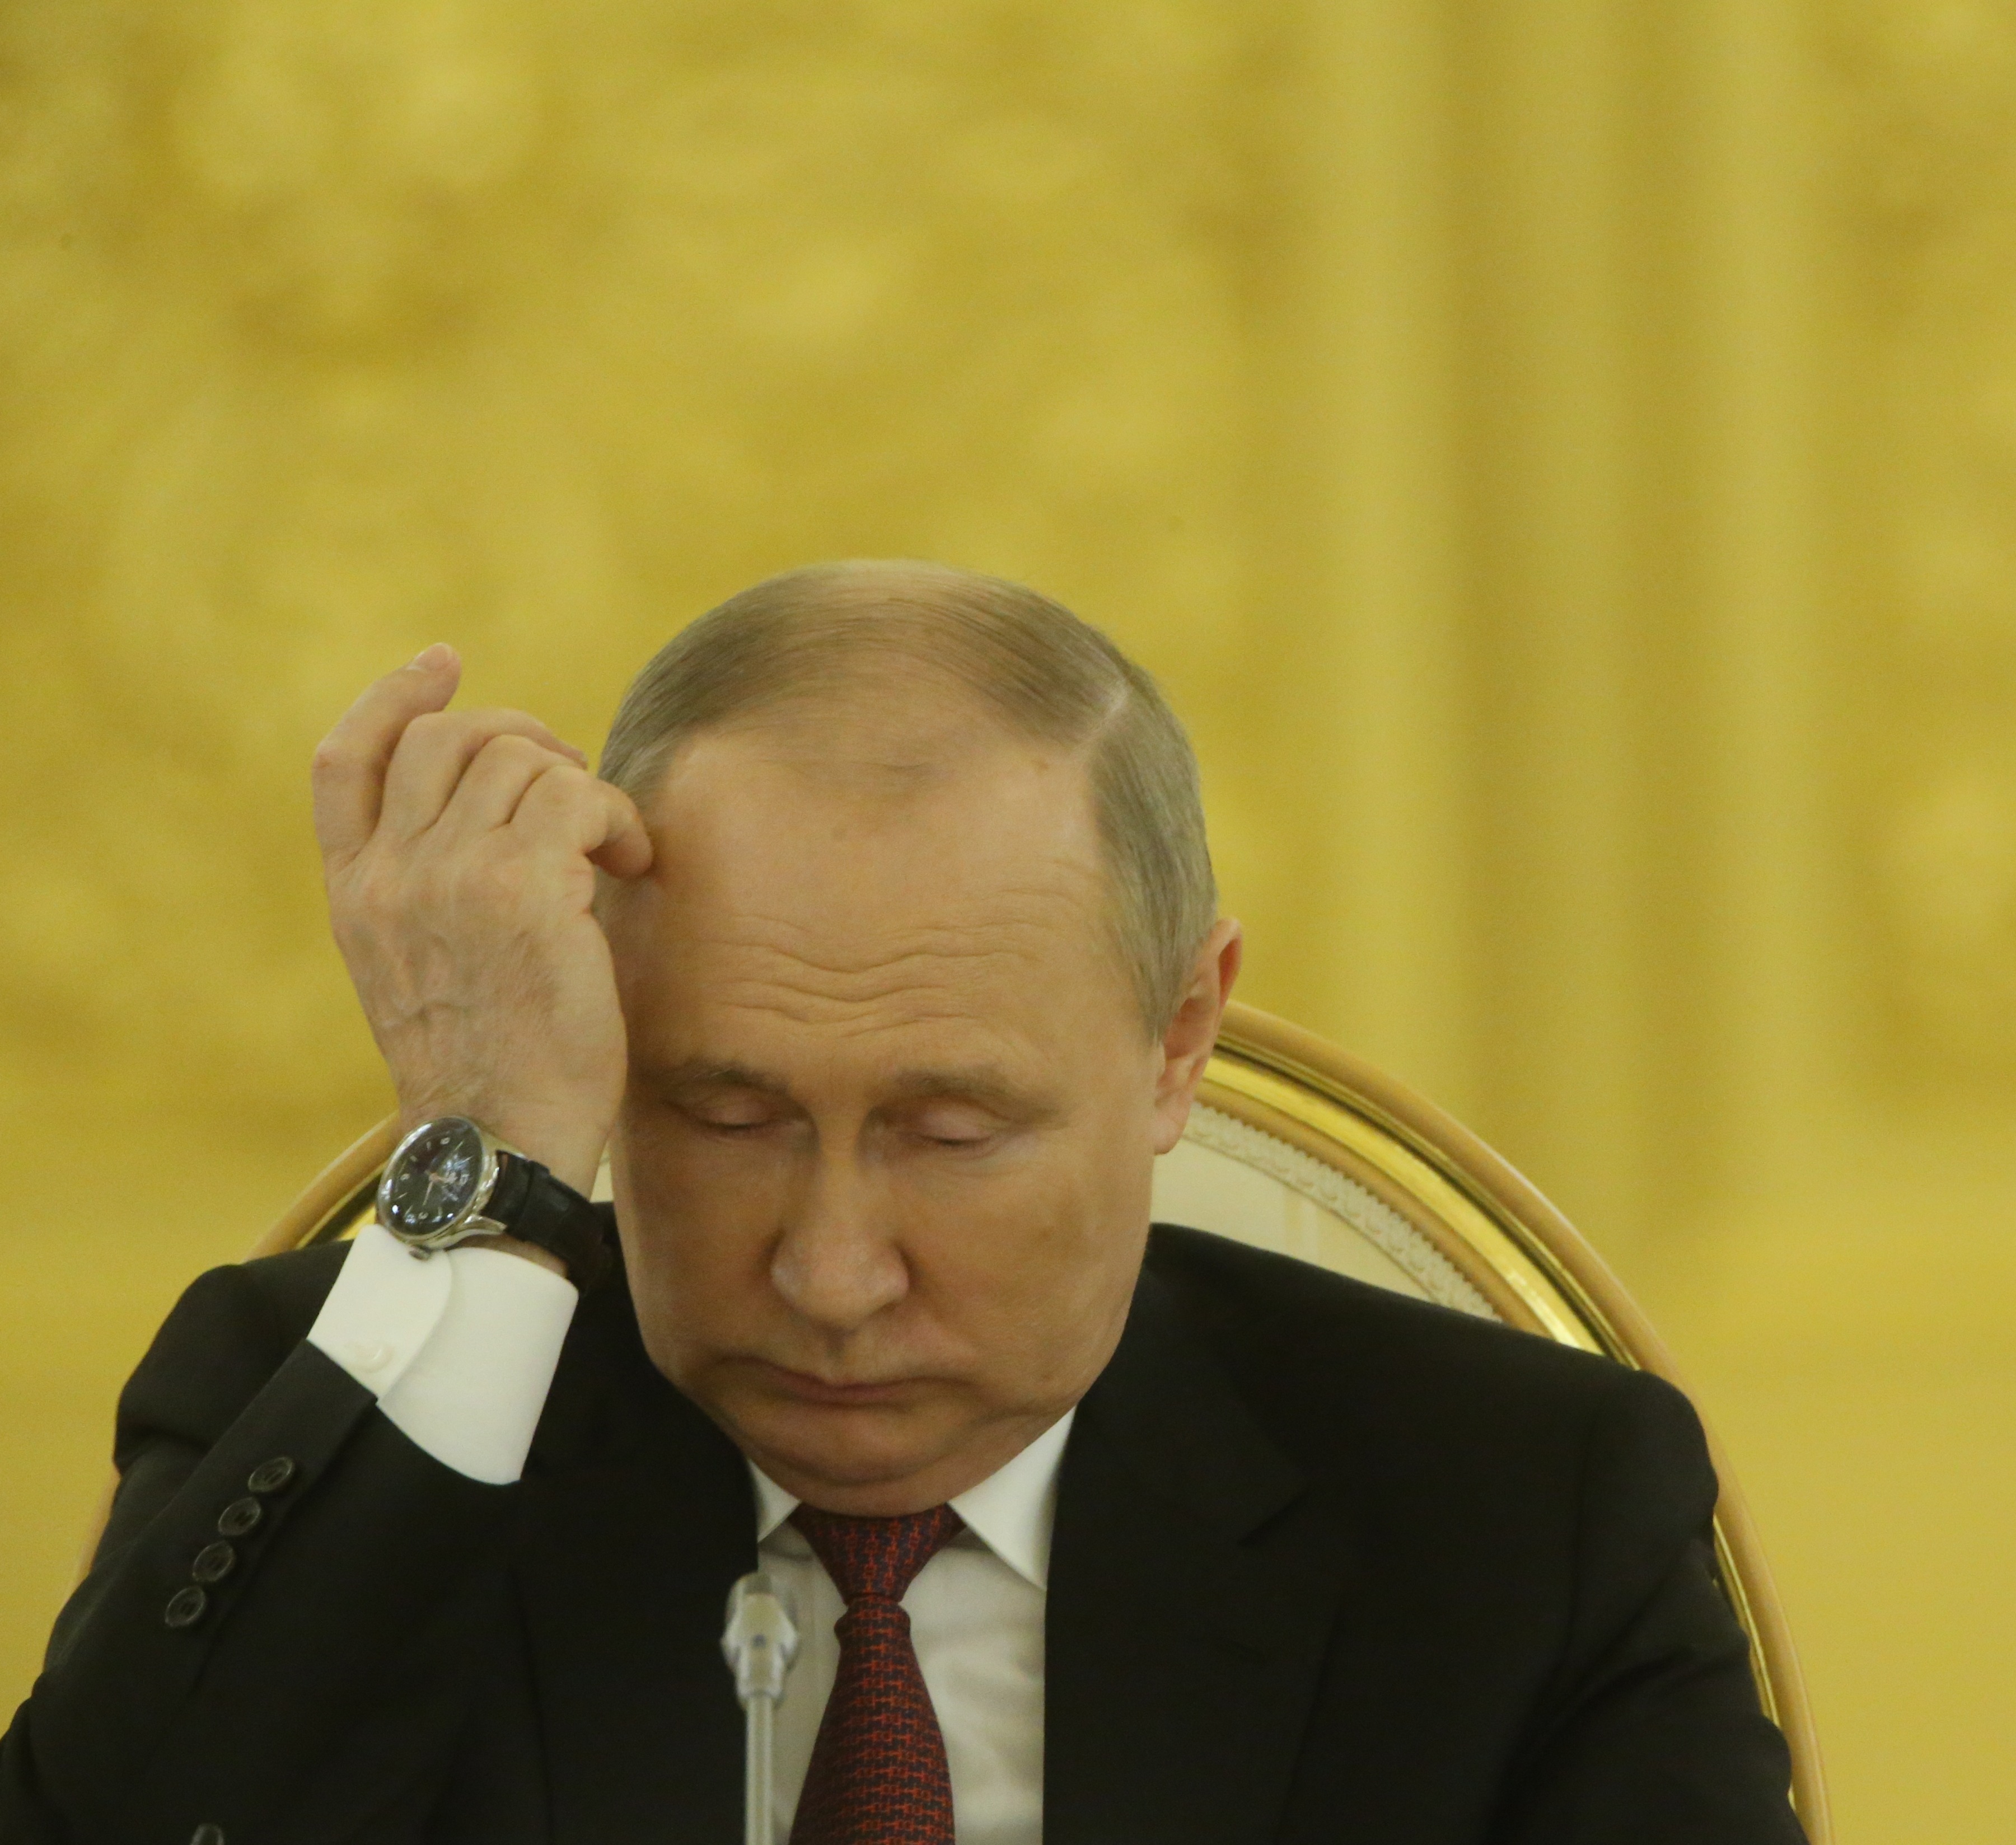 Putin sufre "varias enfermedades", dice jefe de espionaje de Ucrania